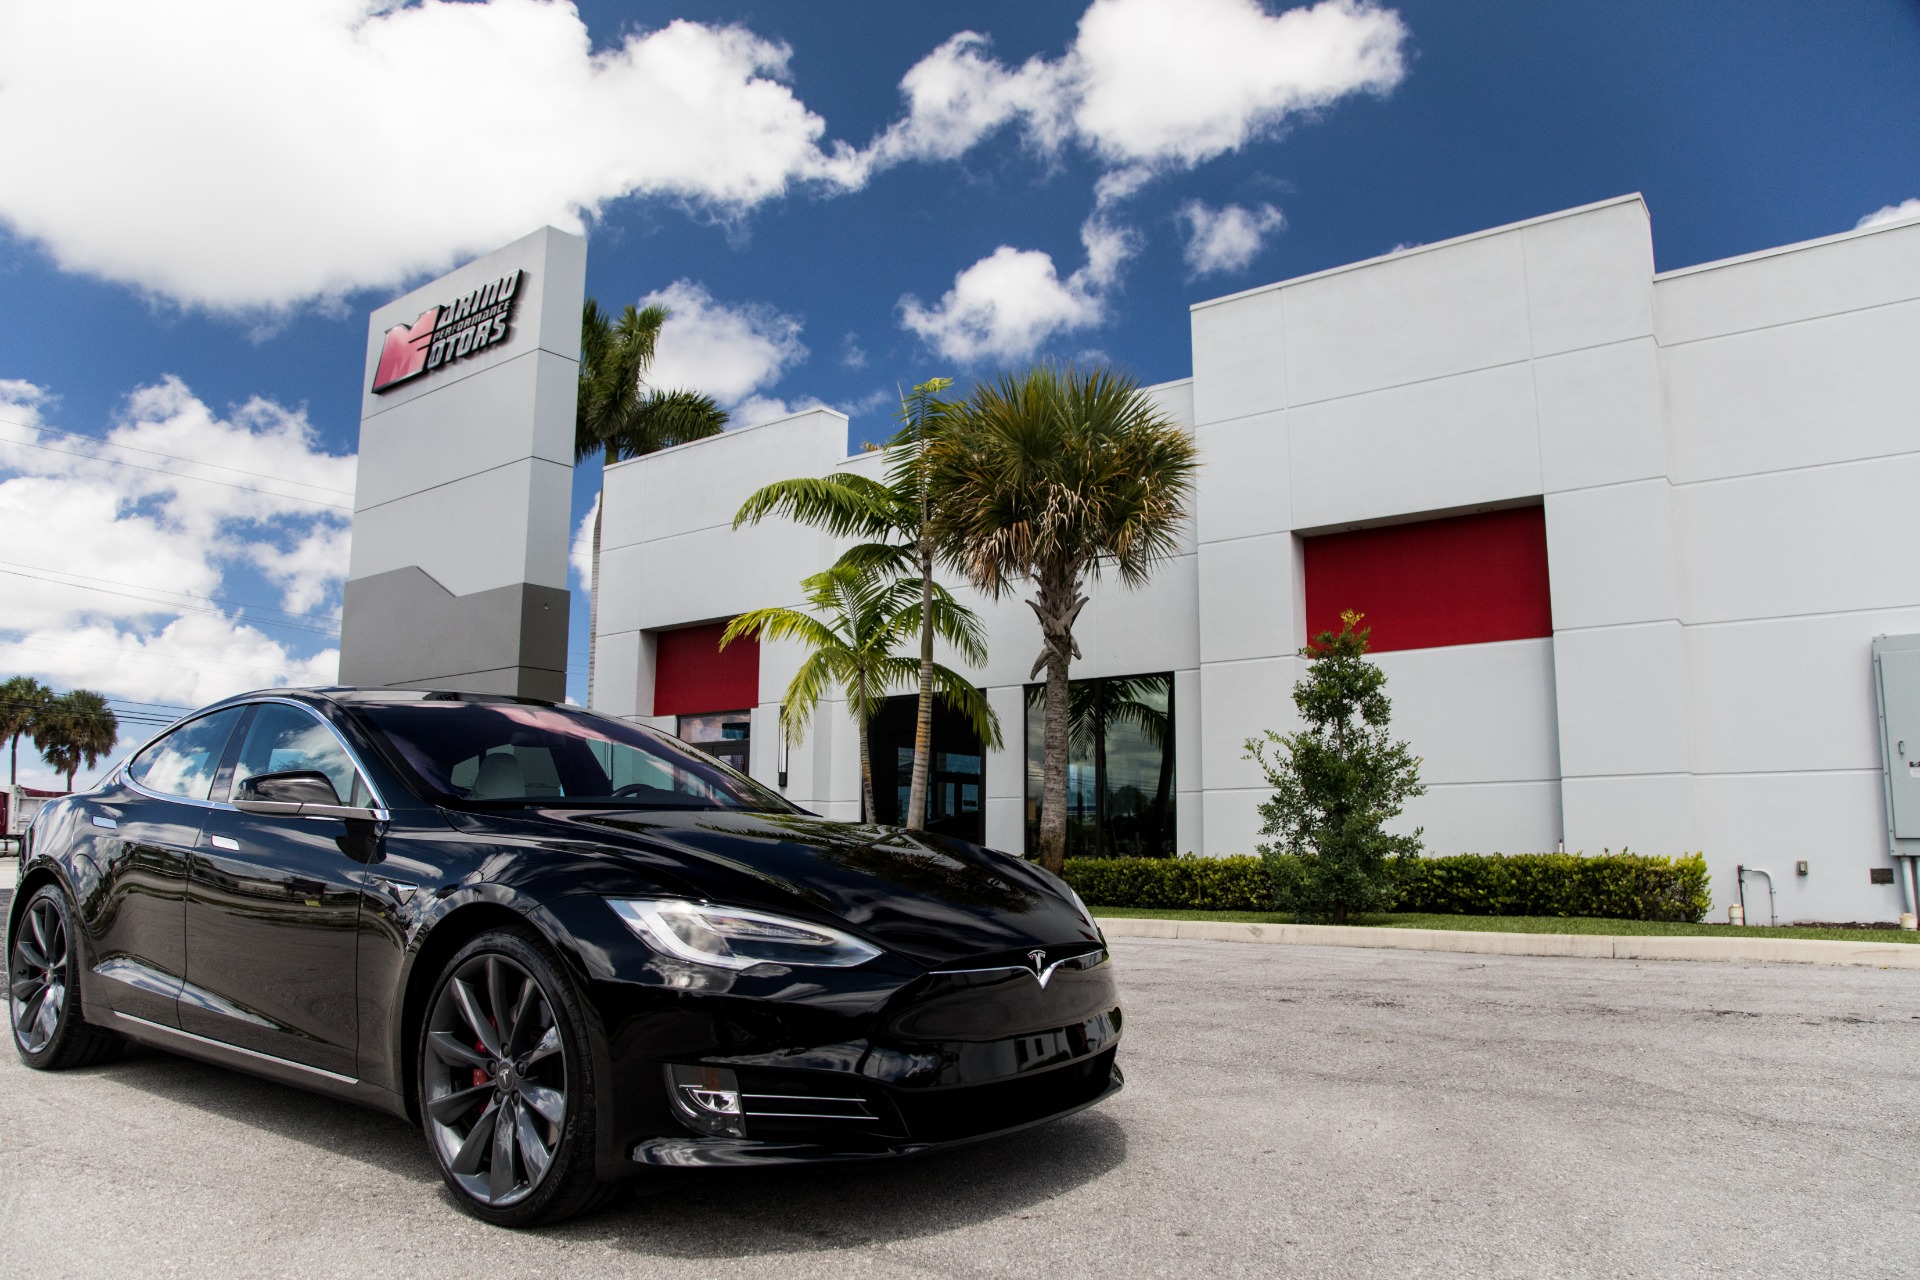 Executie Omleiden blozen Used 2018 Tesla Model S P100D For Sale ($85,900) | Marino Performance Motors  Stock #251885